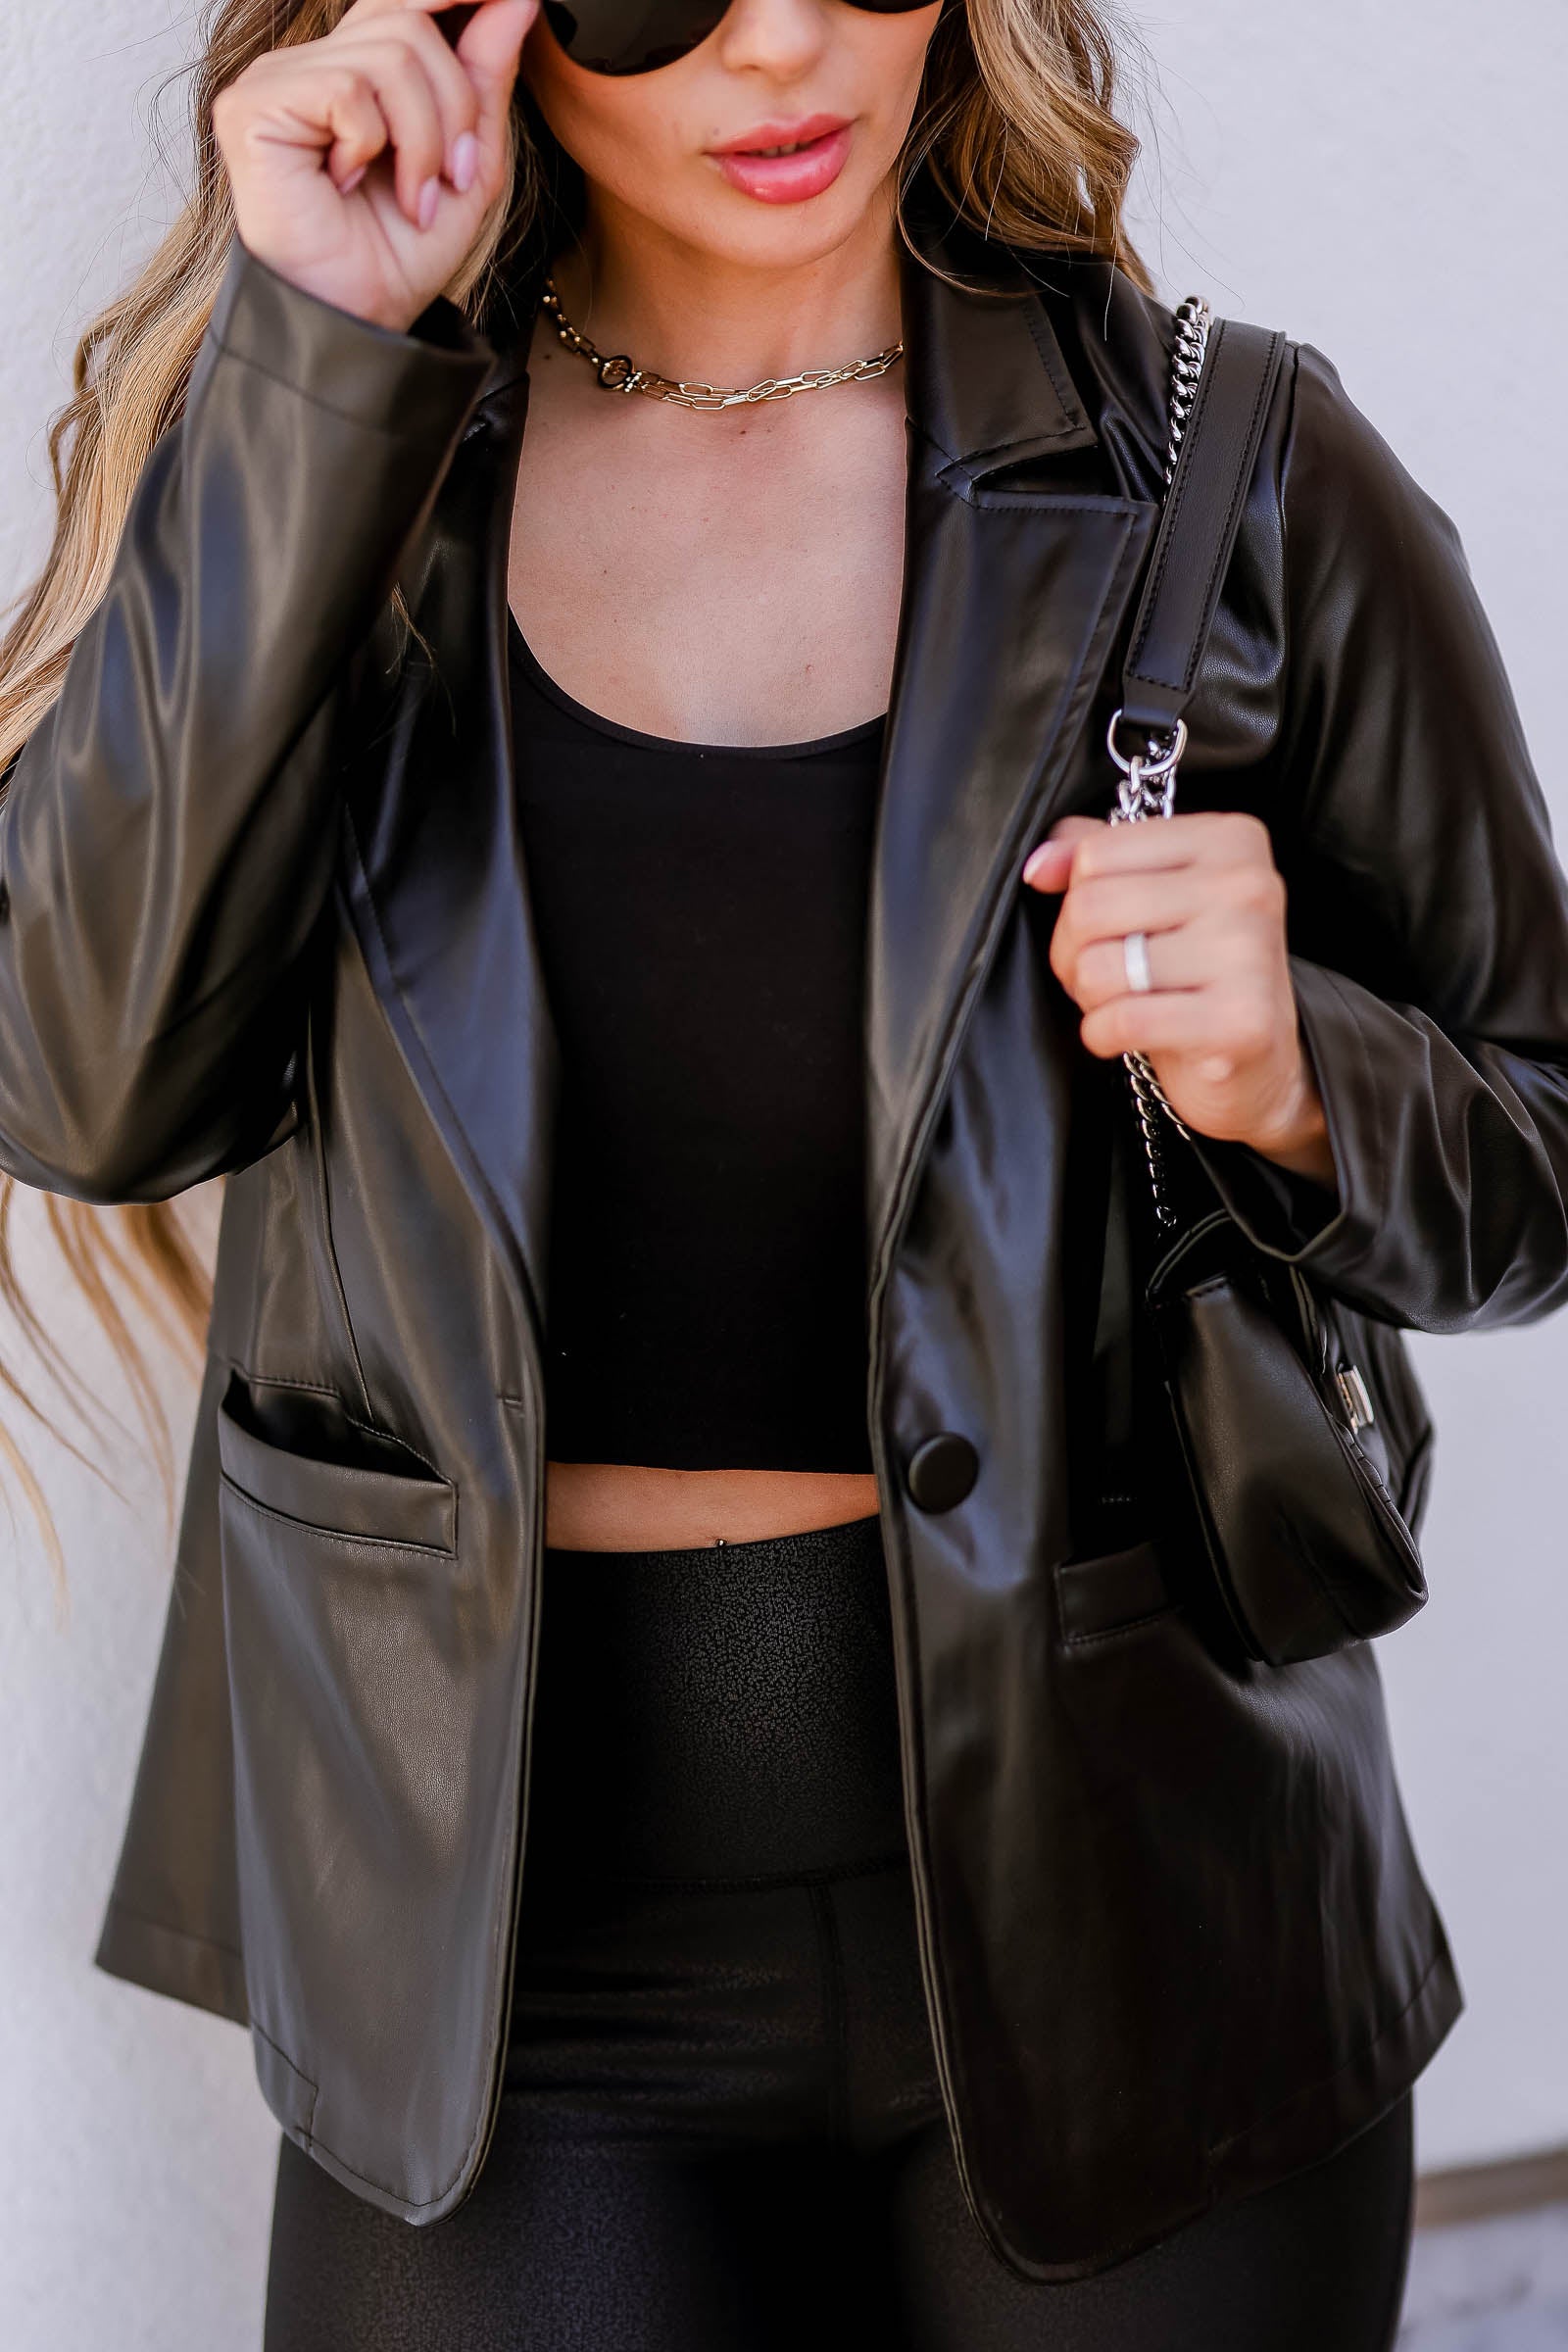 CBRAND Back to Business Vegan Leather Blazer - Black, Closet Candy, 1